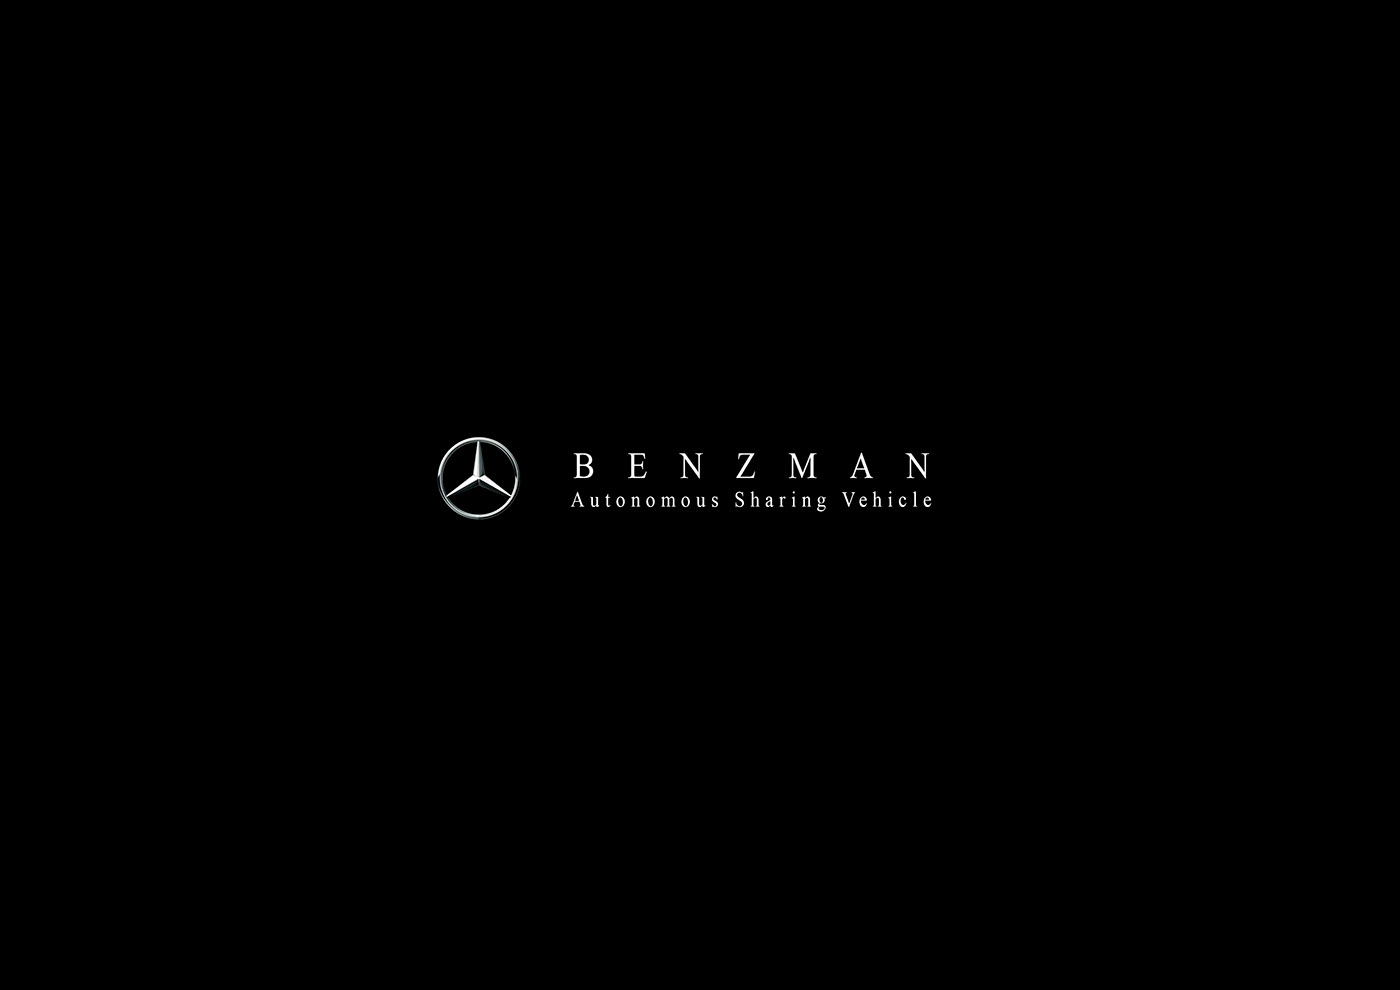 mercedes Benz benzman car design Transportation Design Autonomous concept sketching rendering